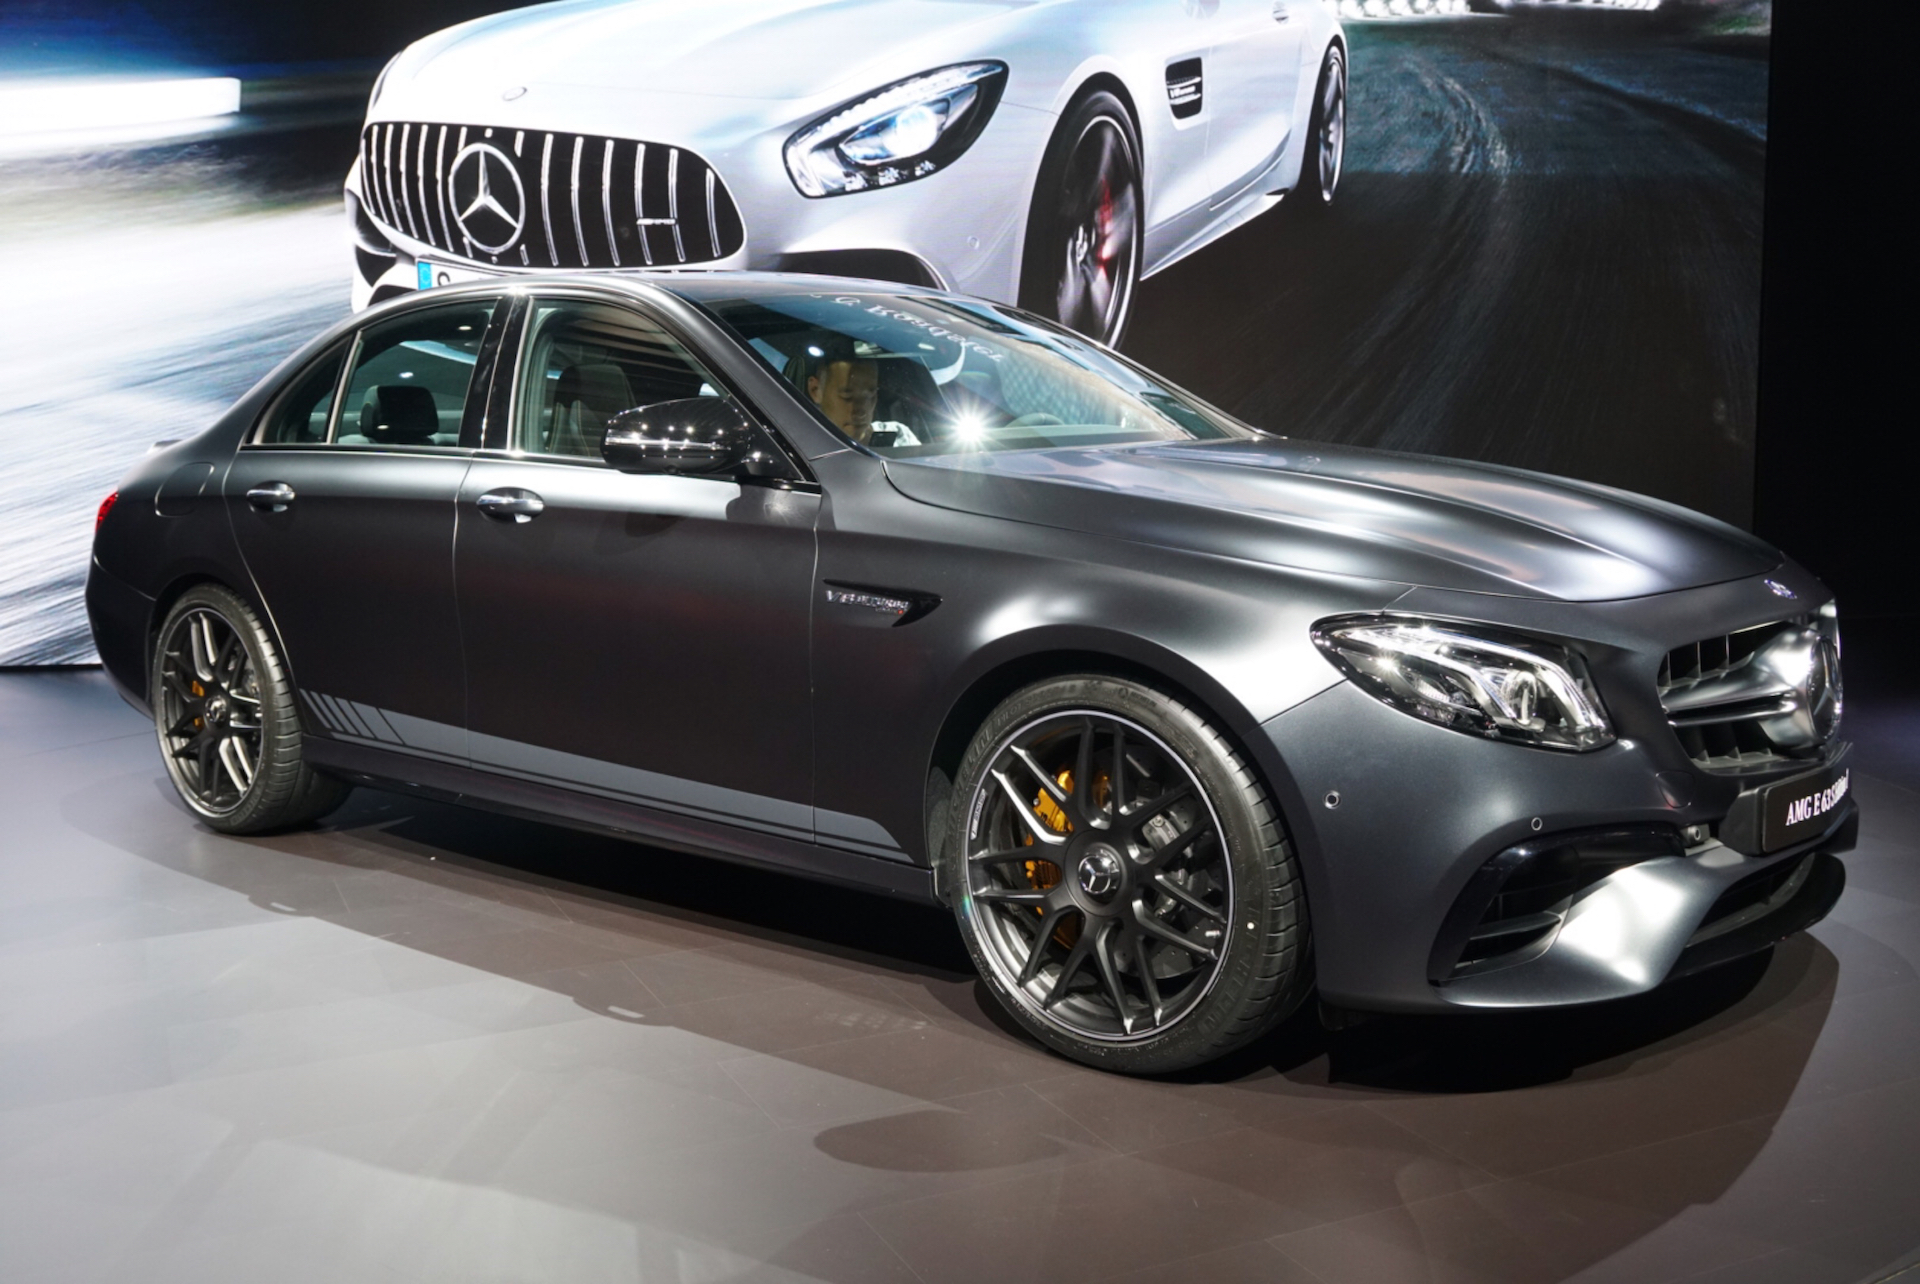 Mercedes-AMG unveils new E63 at 2016 LA auto show